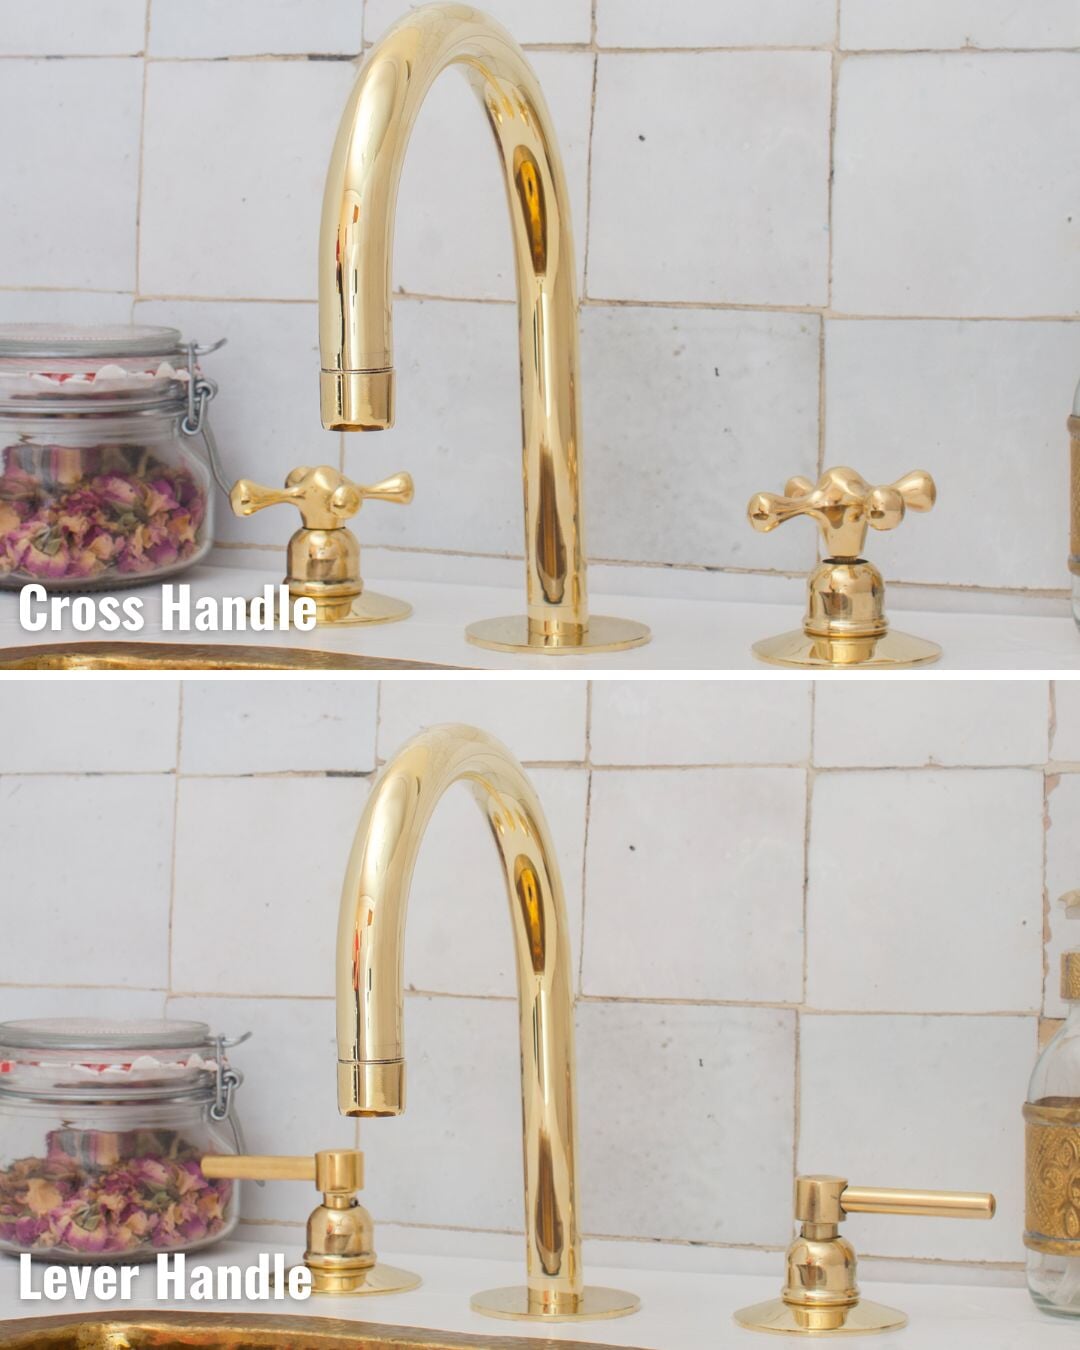 Deck Mounted Unlacquered Brass Faucet, Vanity Sink Faucet, Antique Brass Bathroom Faucet